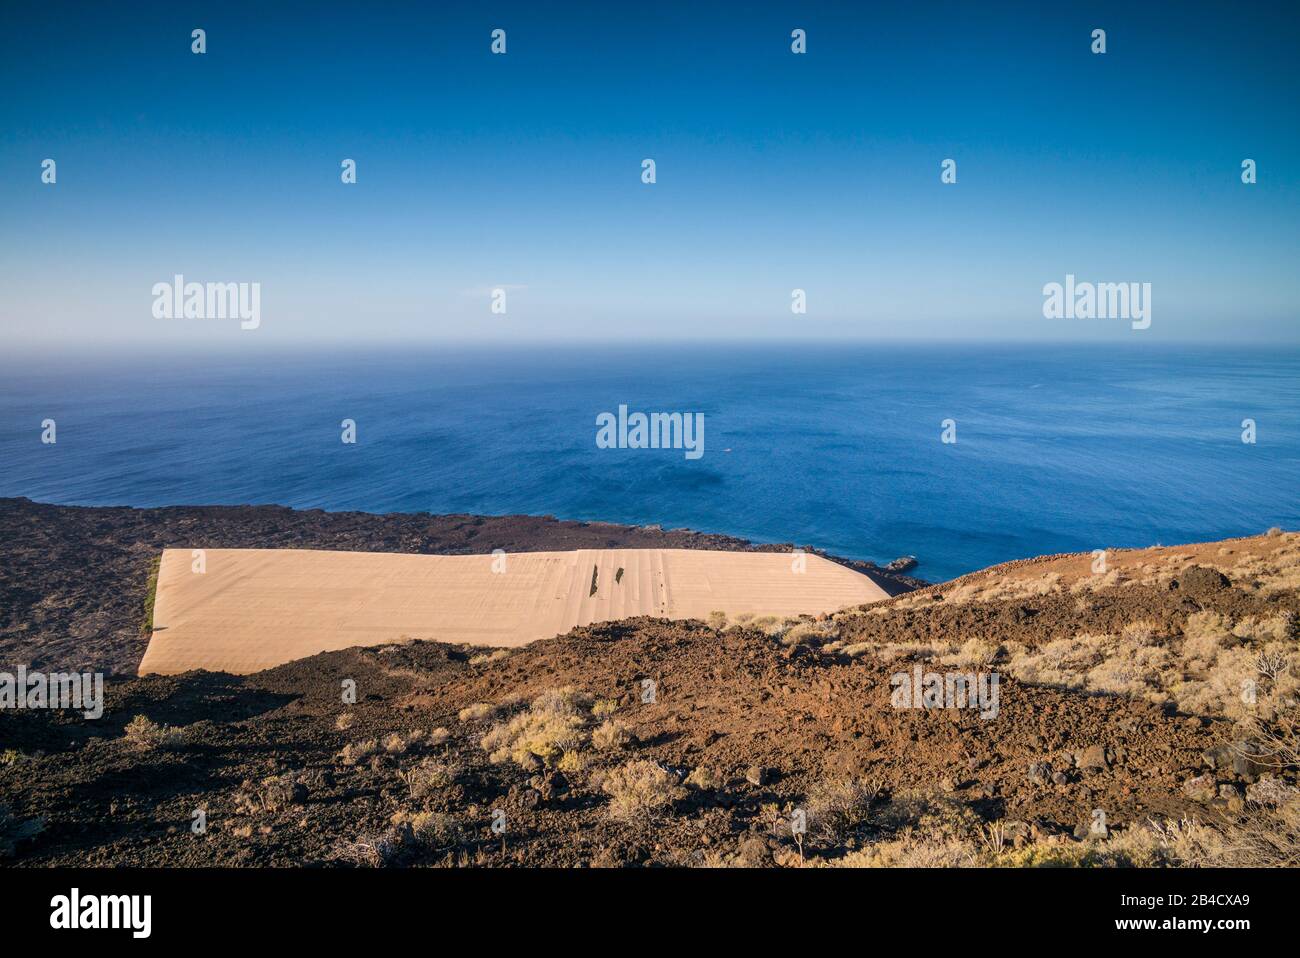 Spain, Canary Islands, El Hierro Island, La Restinga, elevated view of banana plantation Stock Photo